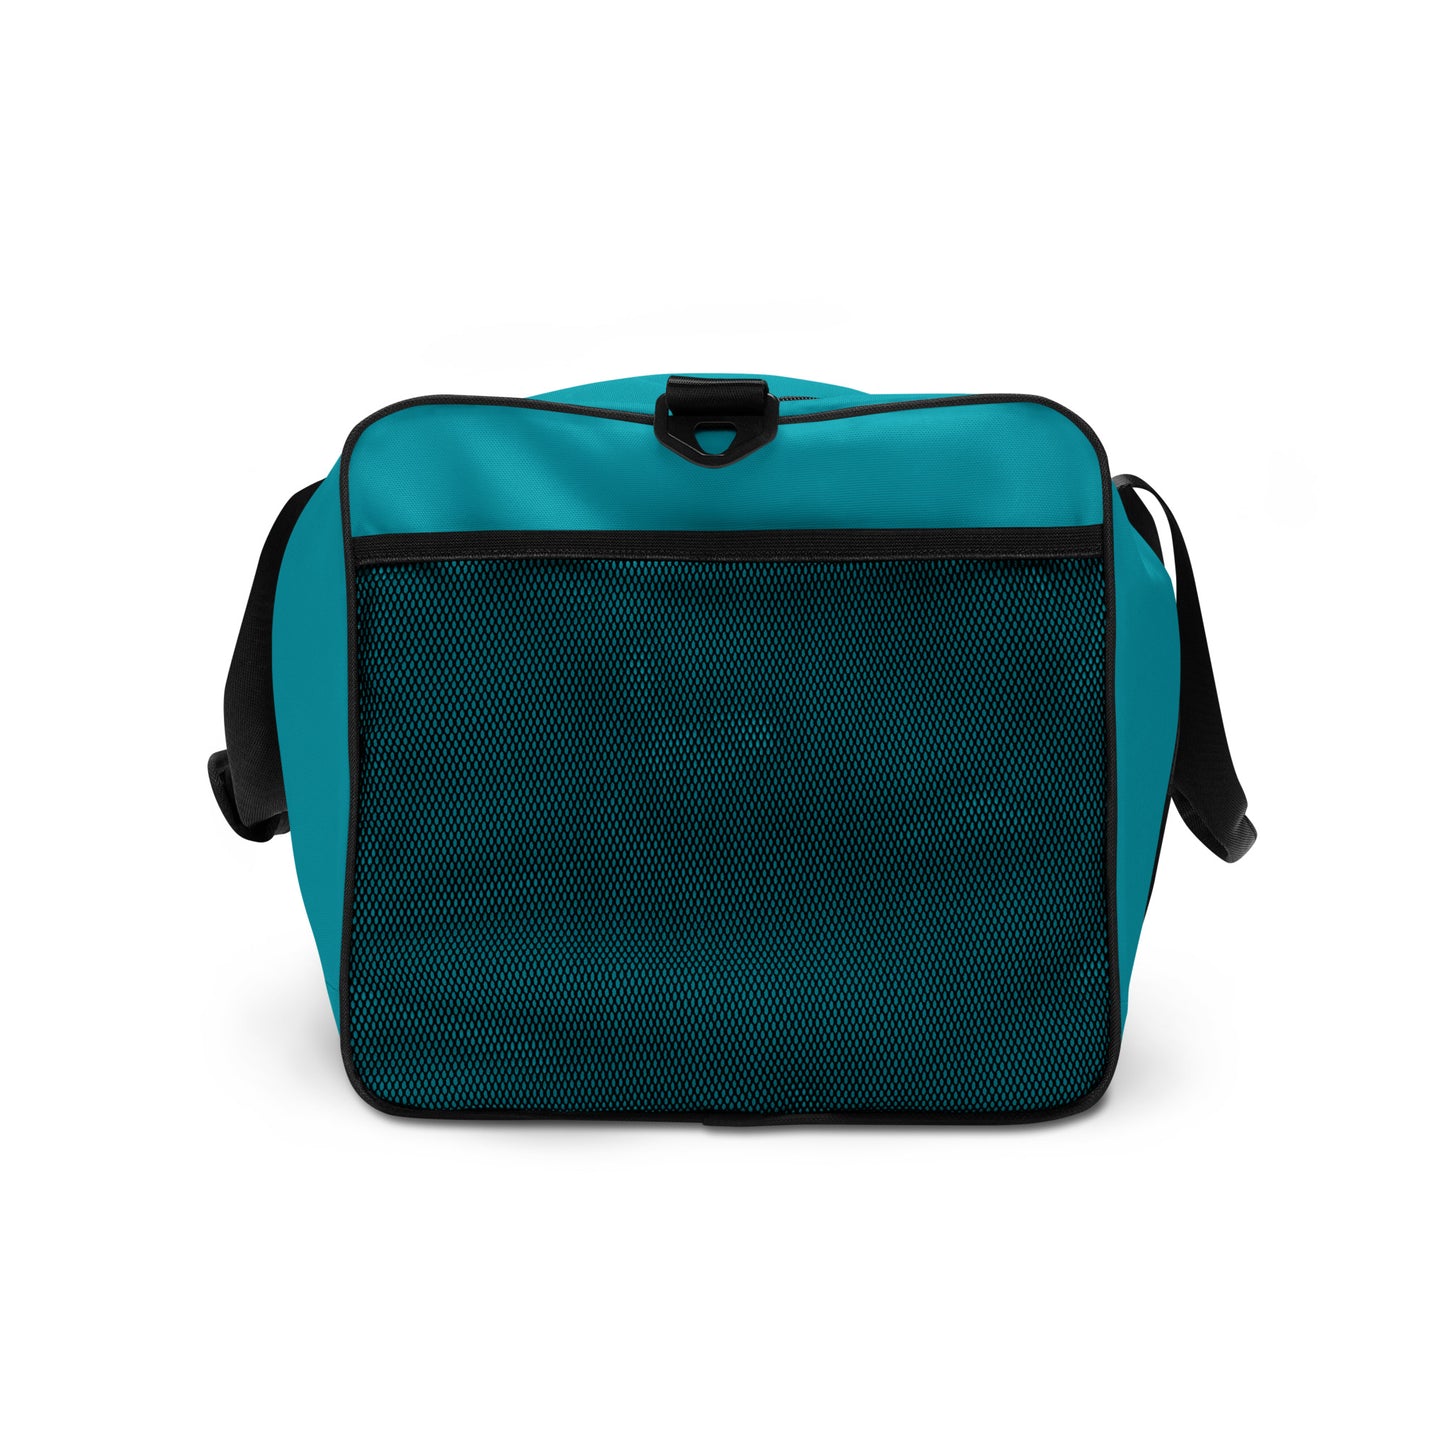 Turquoise Duffle bag